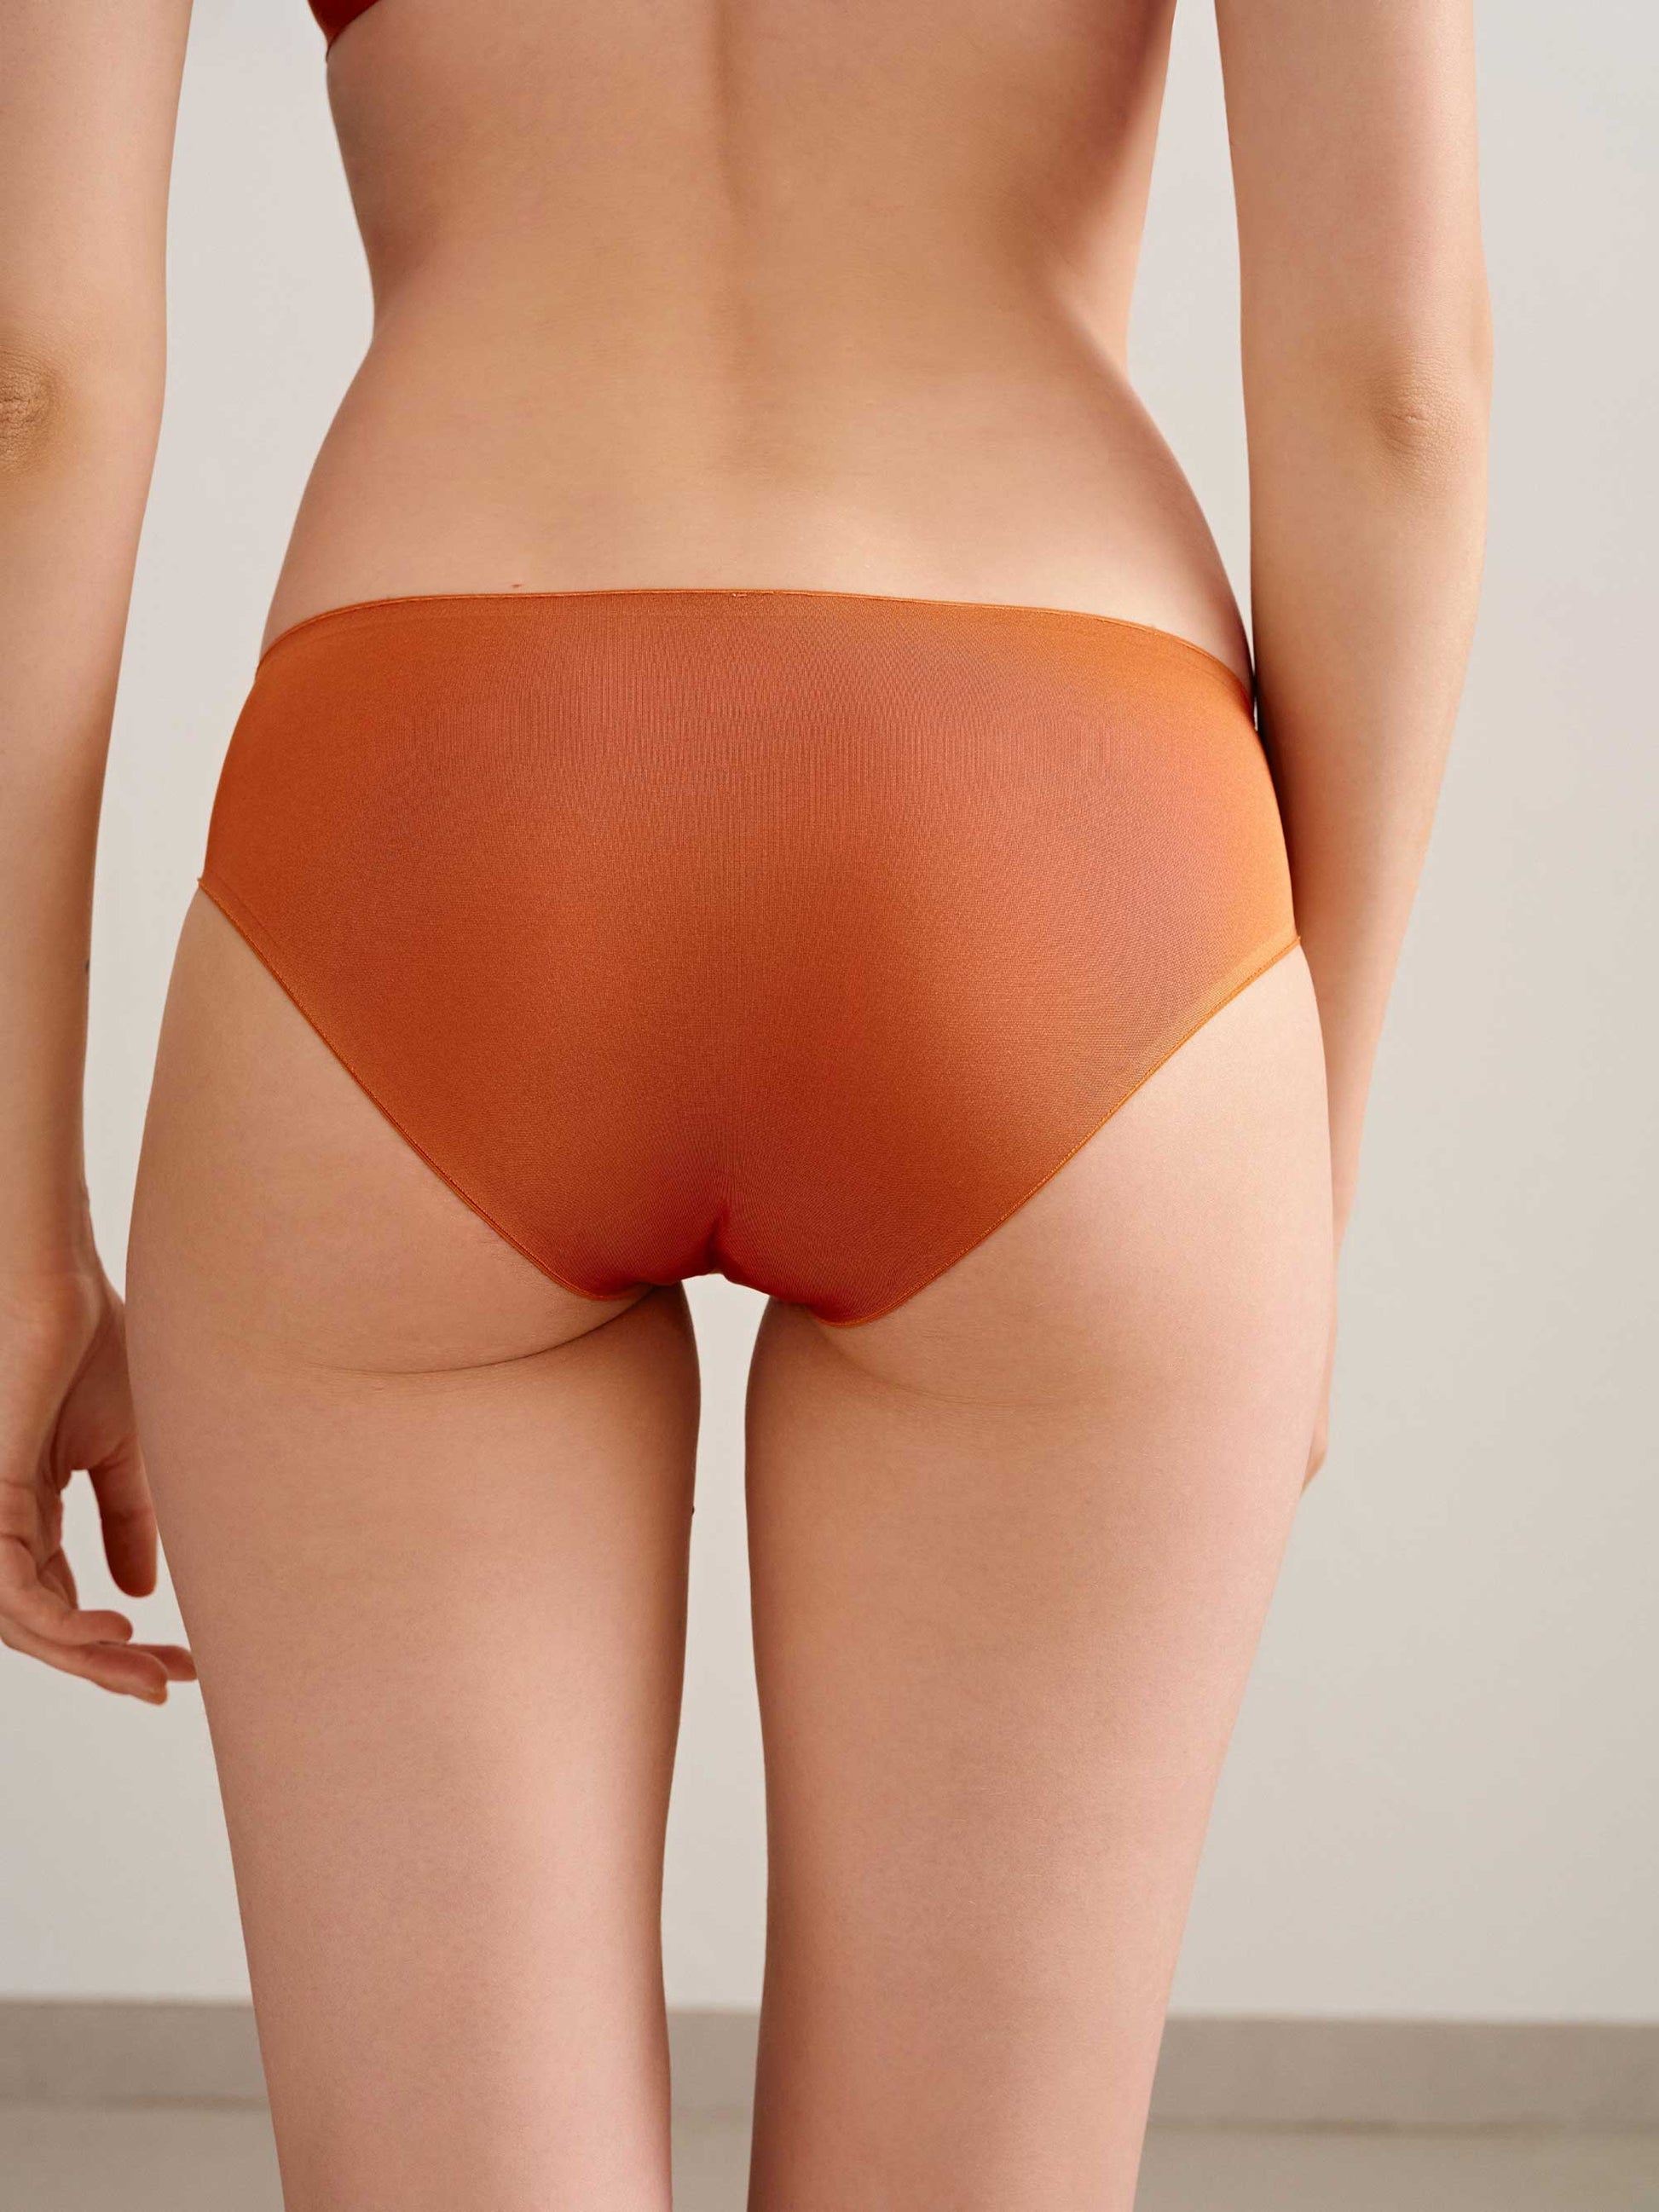 back of woman in orange brief